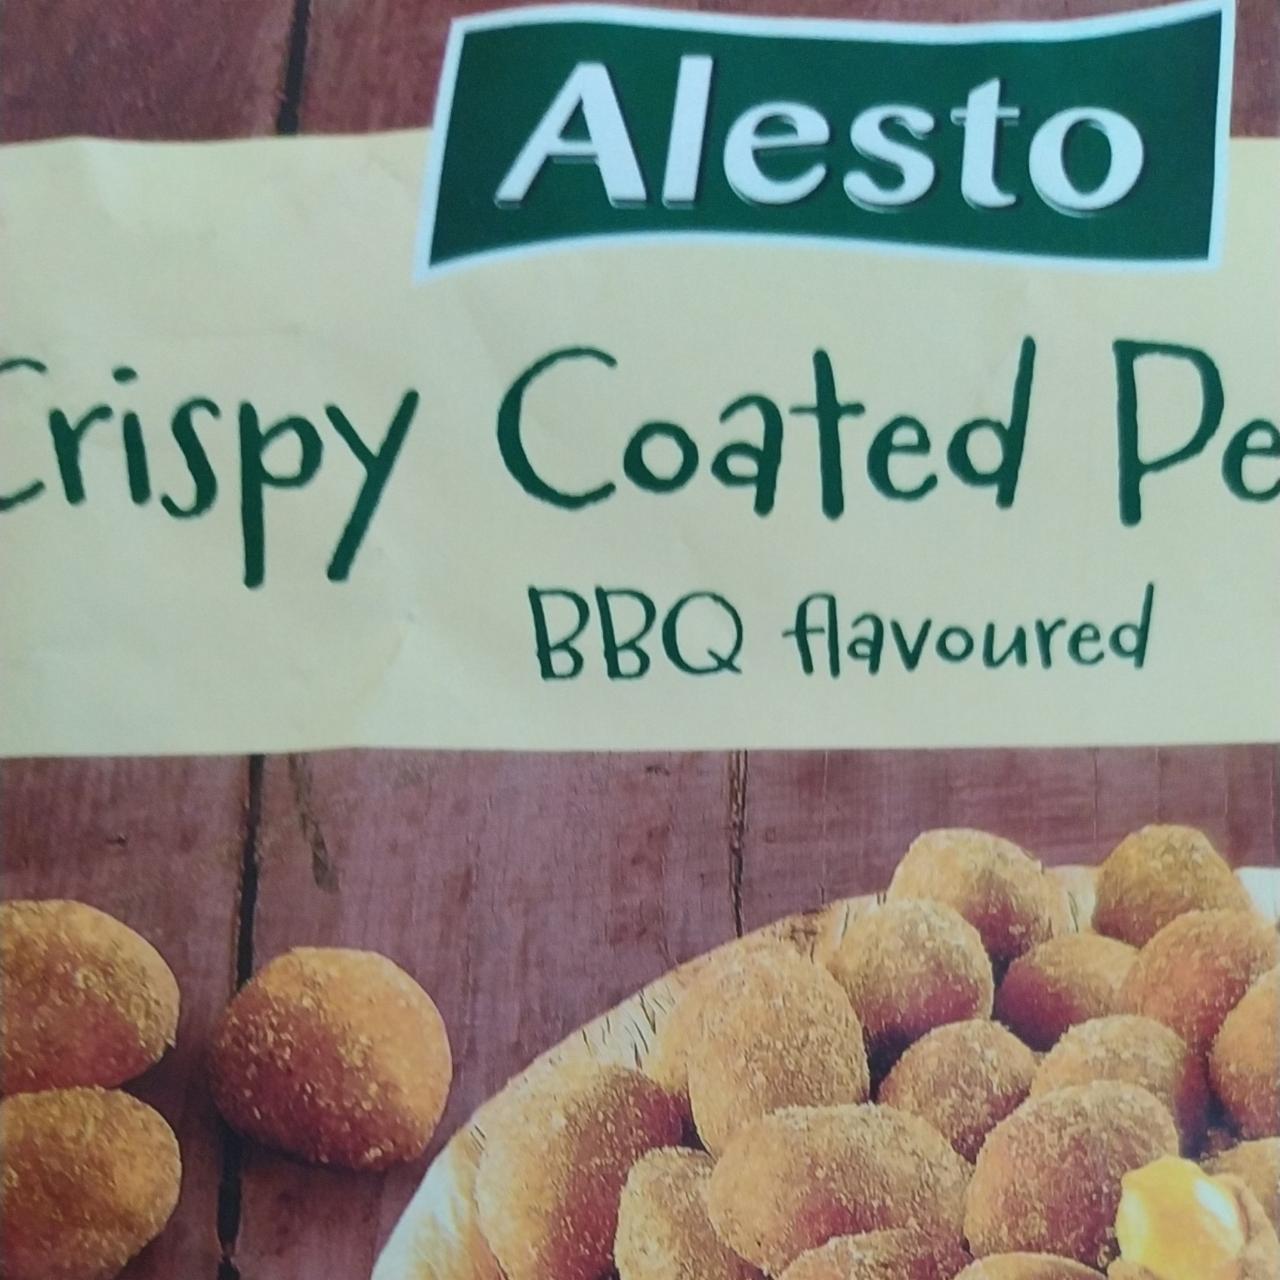 Fotografie - Crispy Coated Peanuts BBQ flavoured Alesto